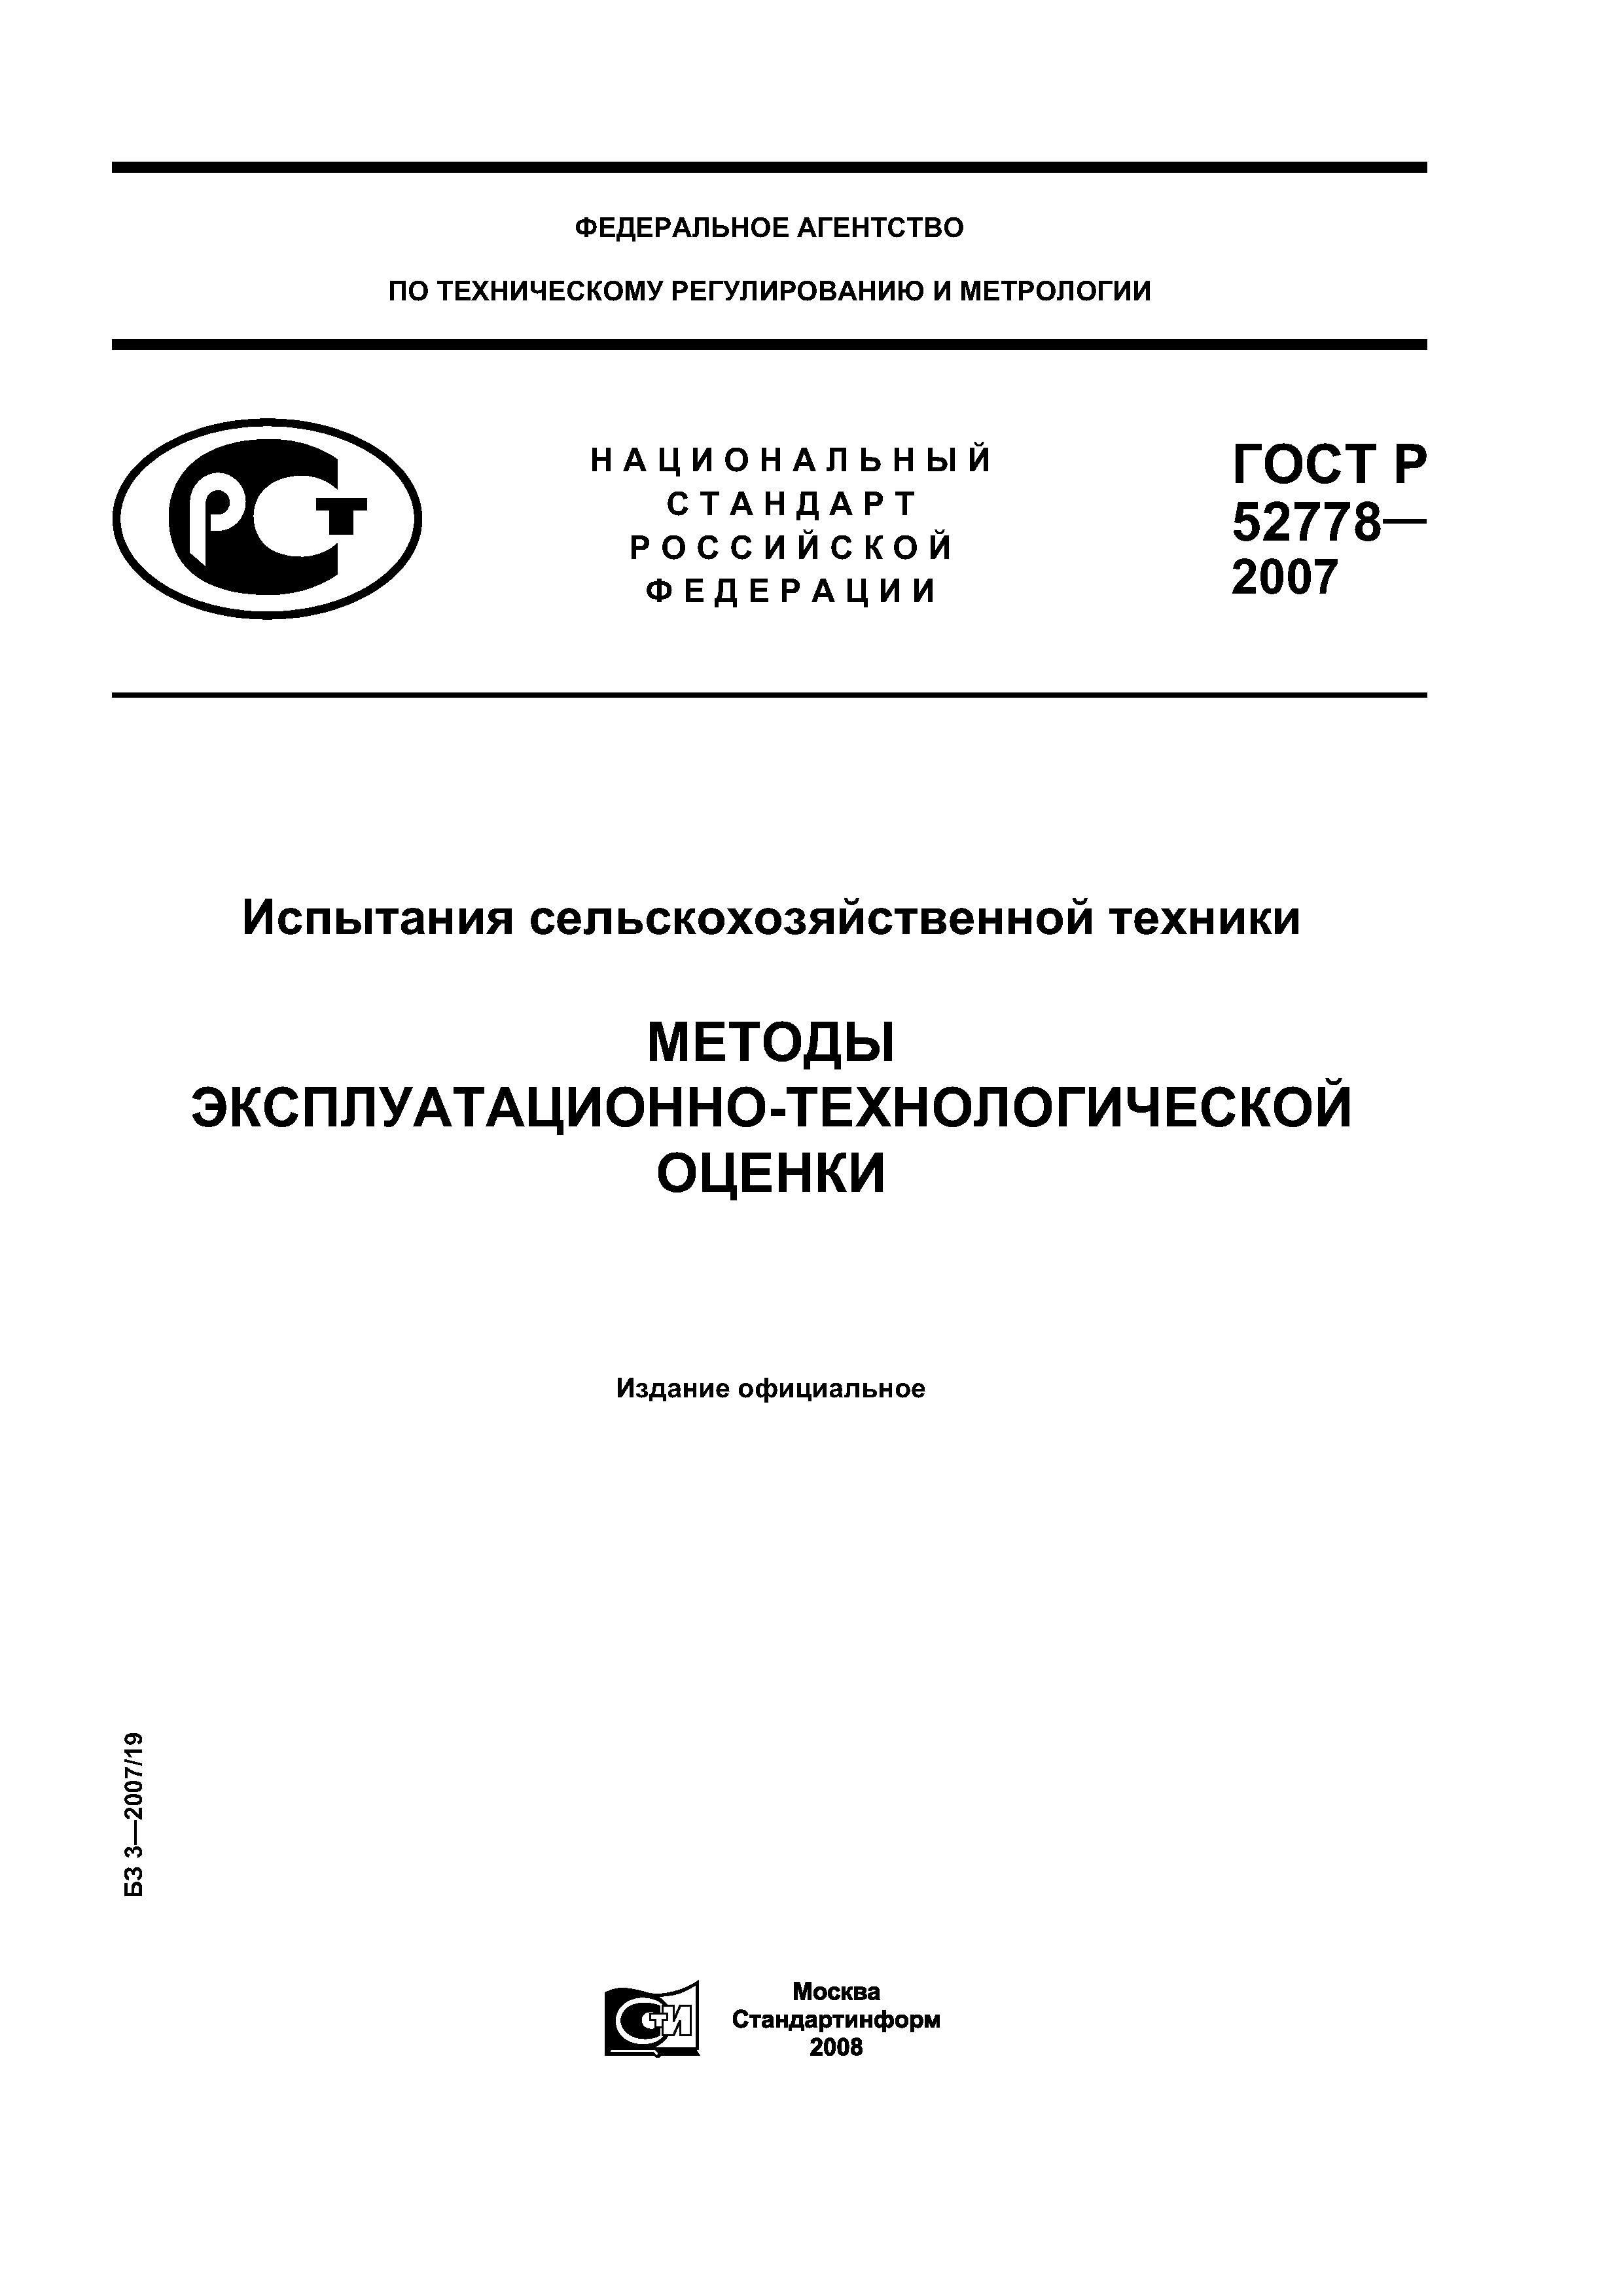 ГОСТ Р 52778-2007